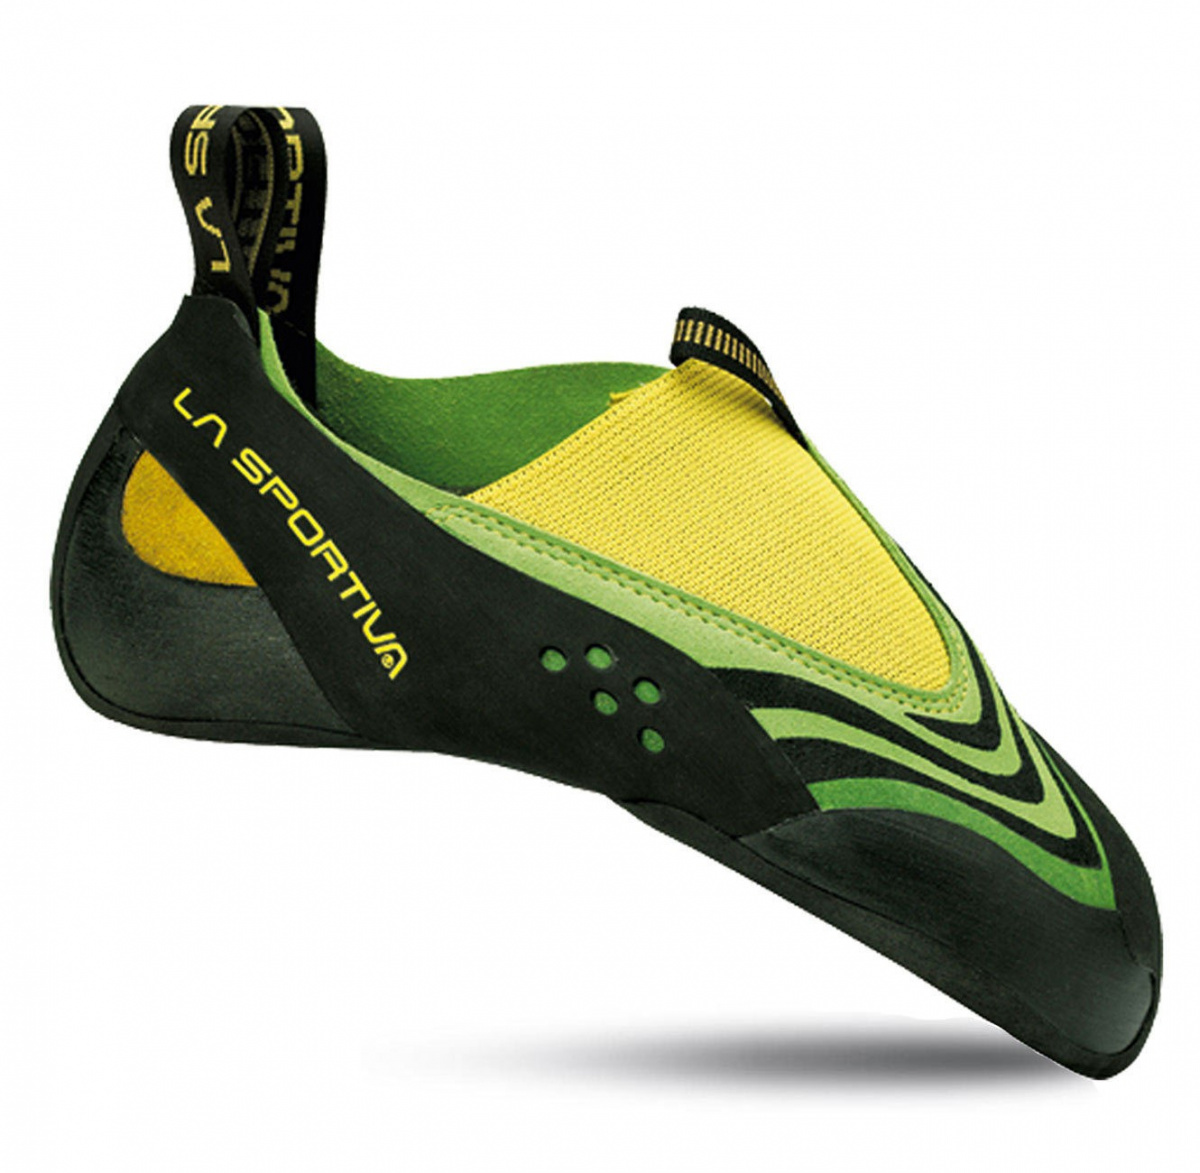 Lezečky La Sportiva Speedster green/yellow 34 EU